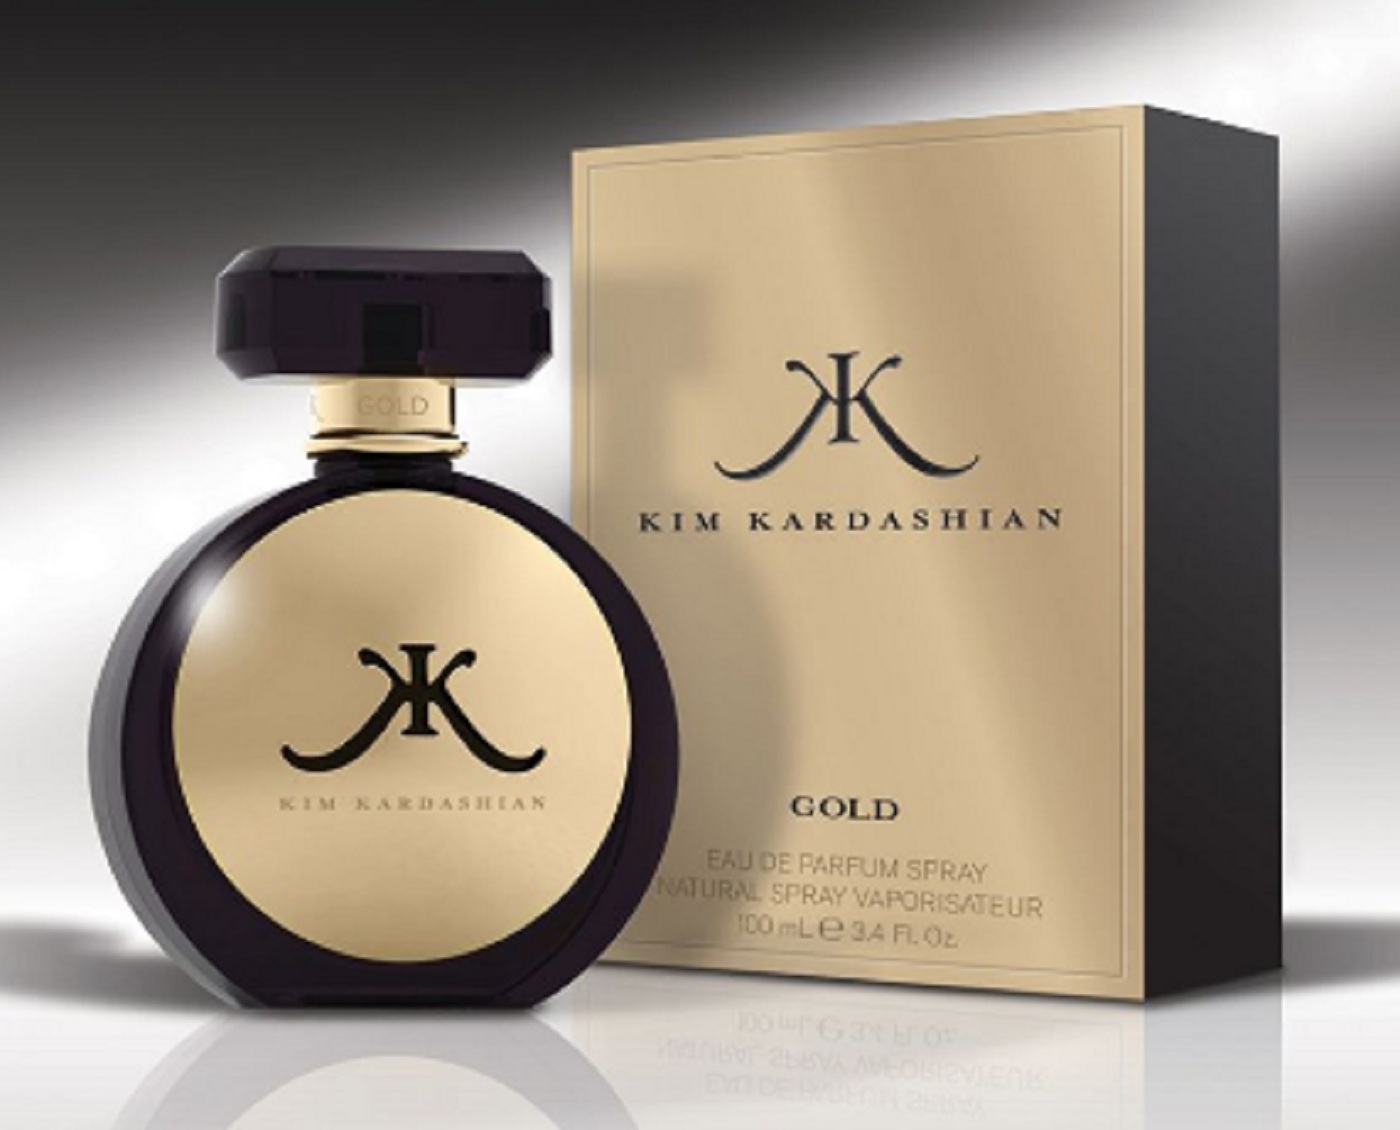 What I'm loving at Sephora: Kim Kardashian's Fragrances!